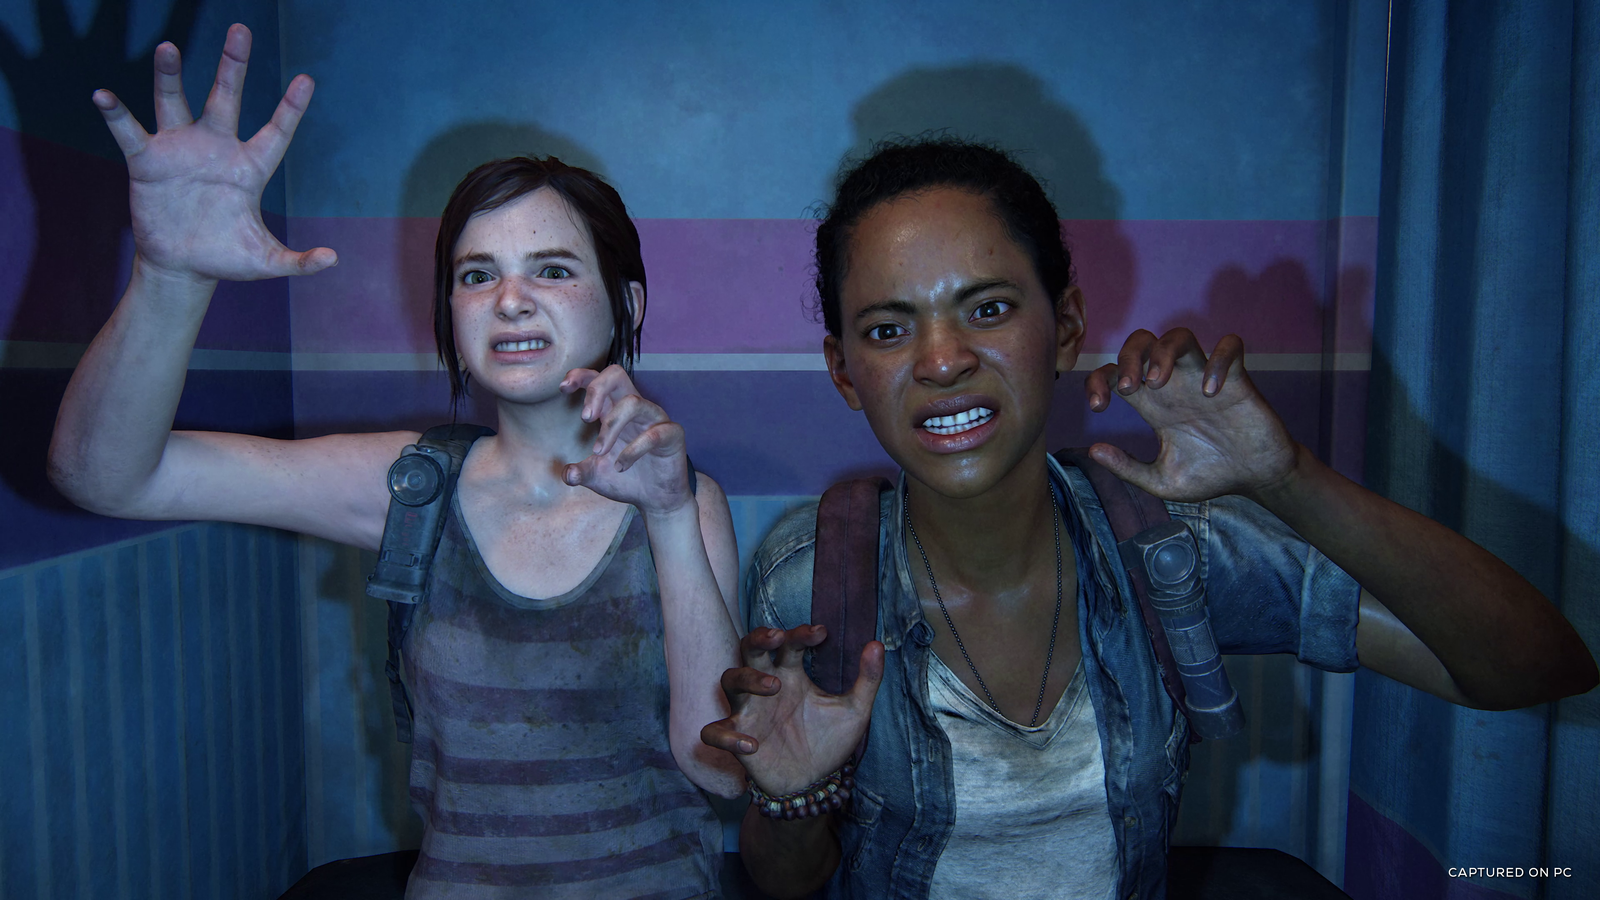 The Last of Us PC acumula mais de 8 mil críticas negativas no Steam -  Millenium